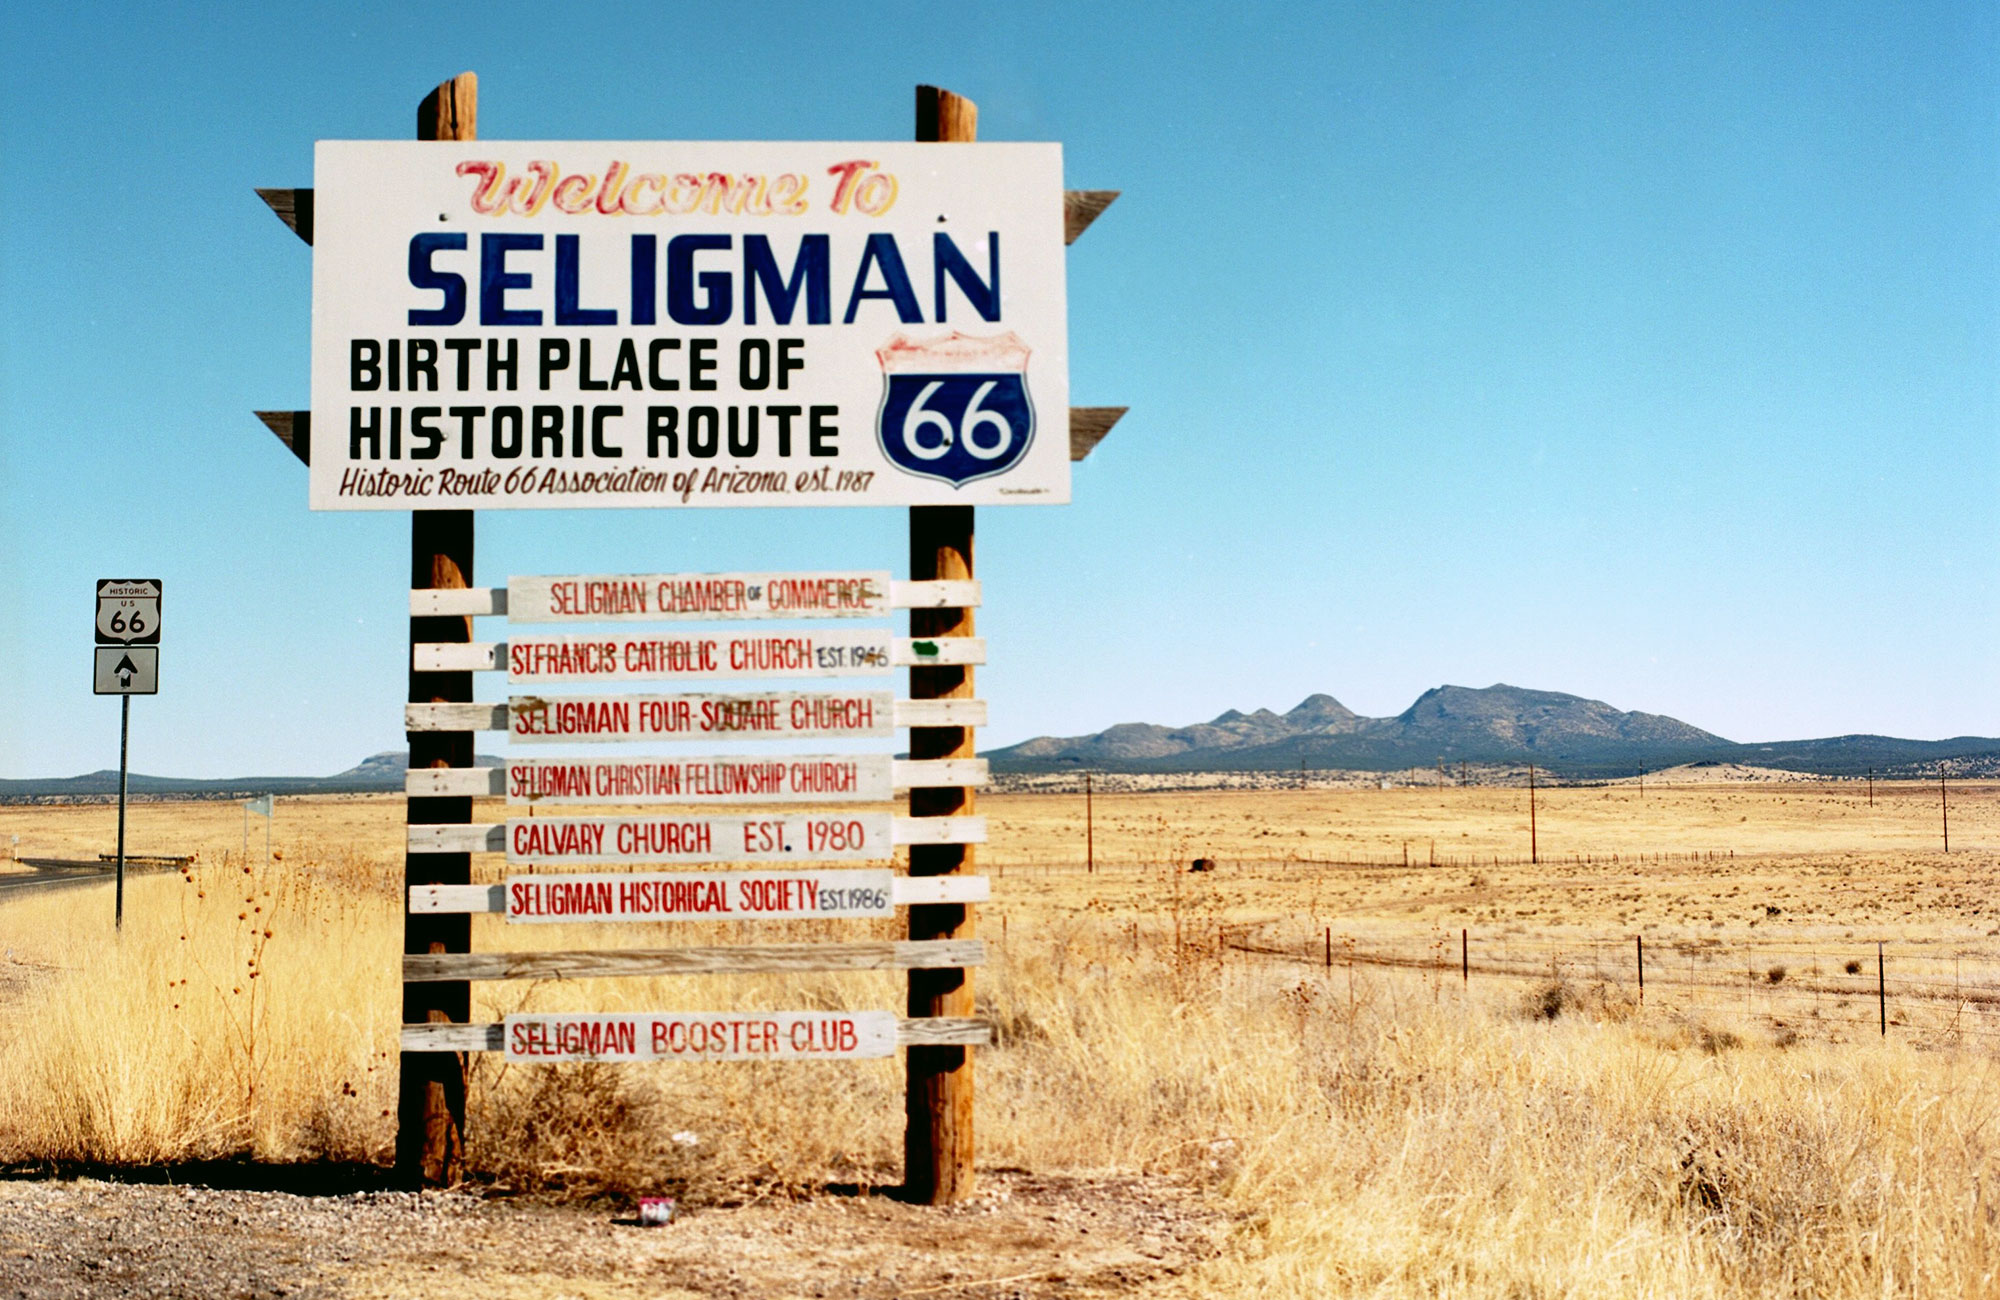 I Seliman, Arizona hittar du flera seevärdheter utmed Route 66